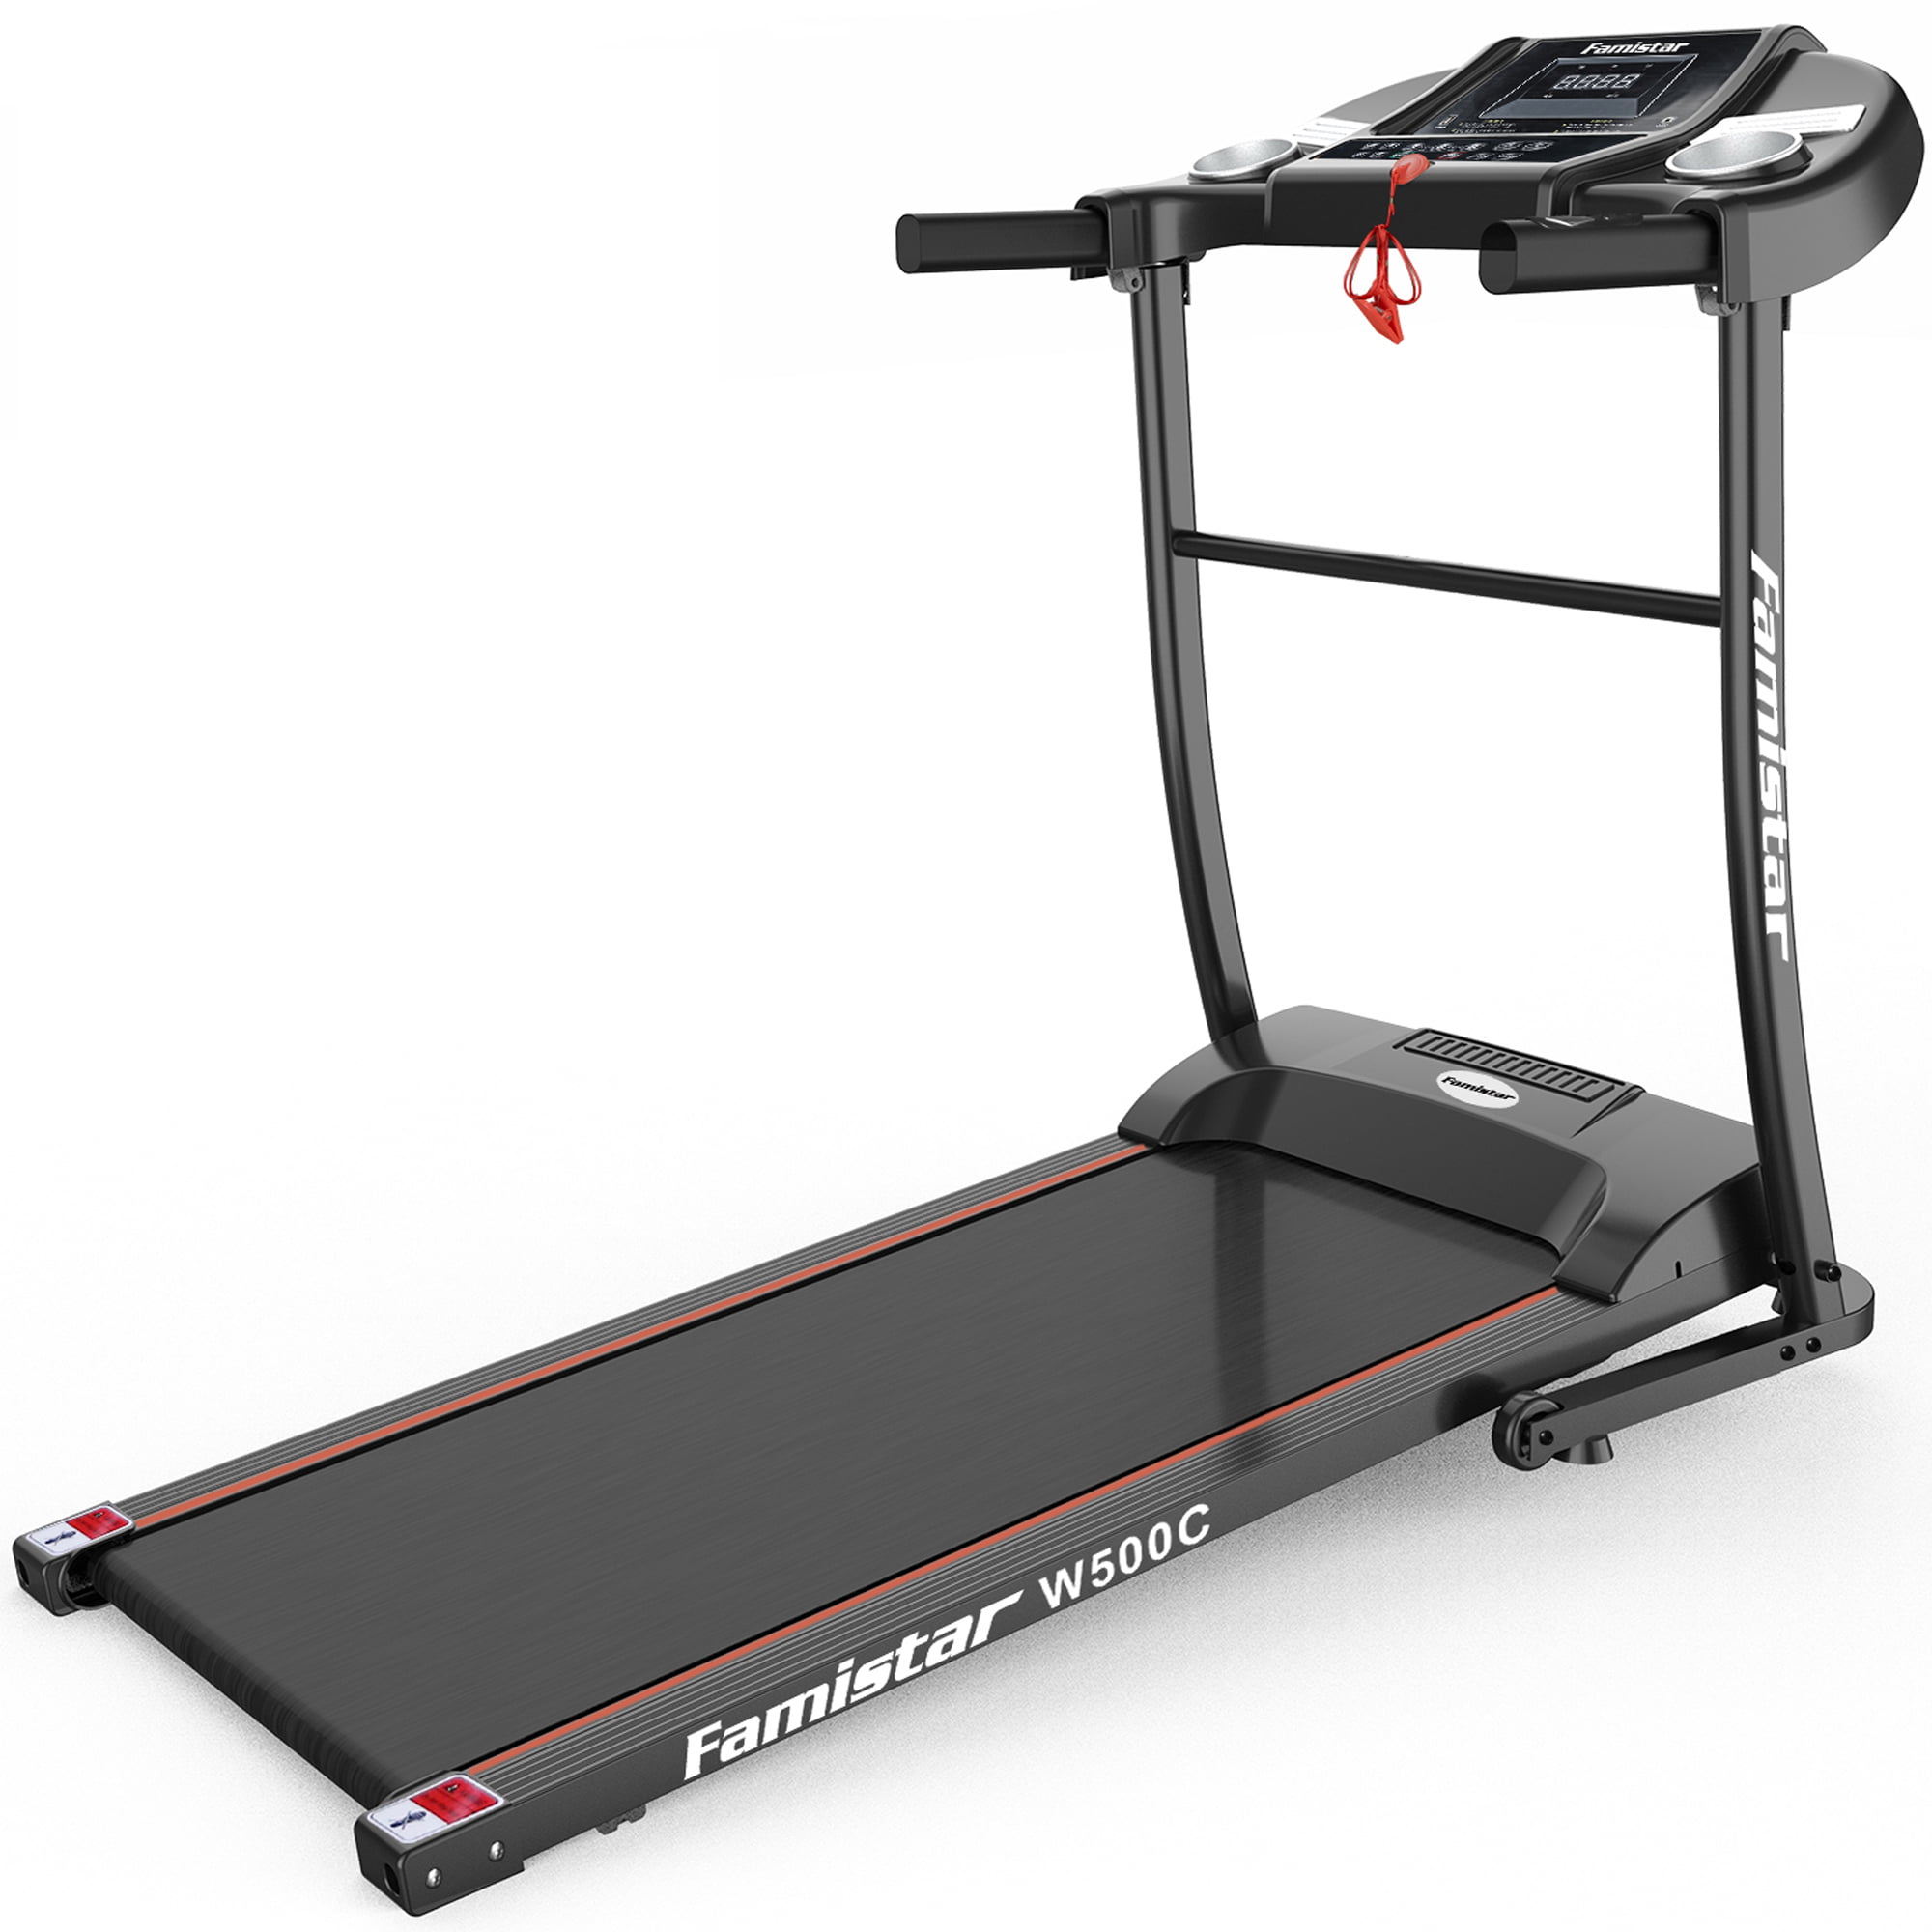 1.5HP Portable Electric Folding Treadmill, Famistar W500C Compact Motorized Running Jogging